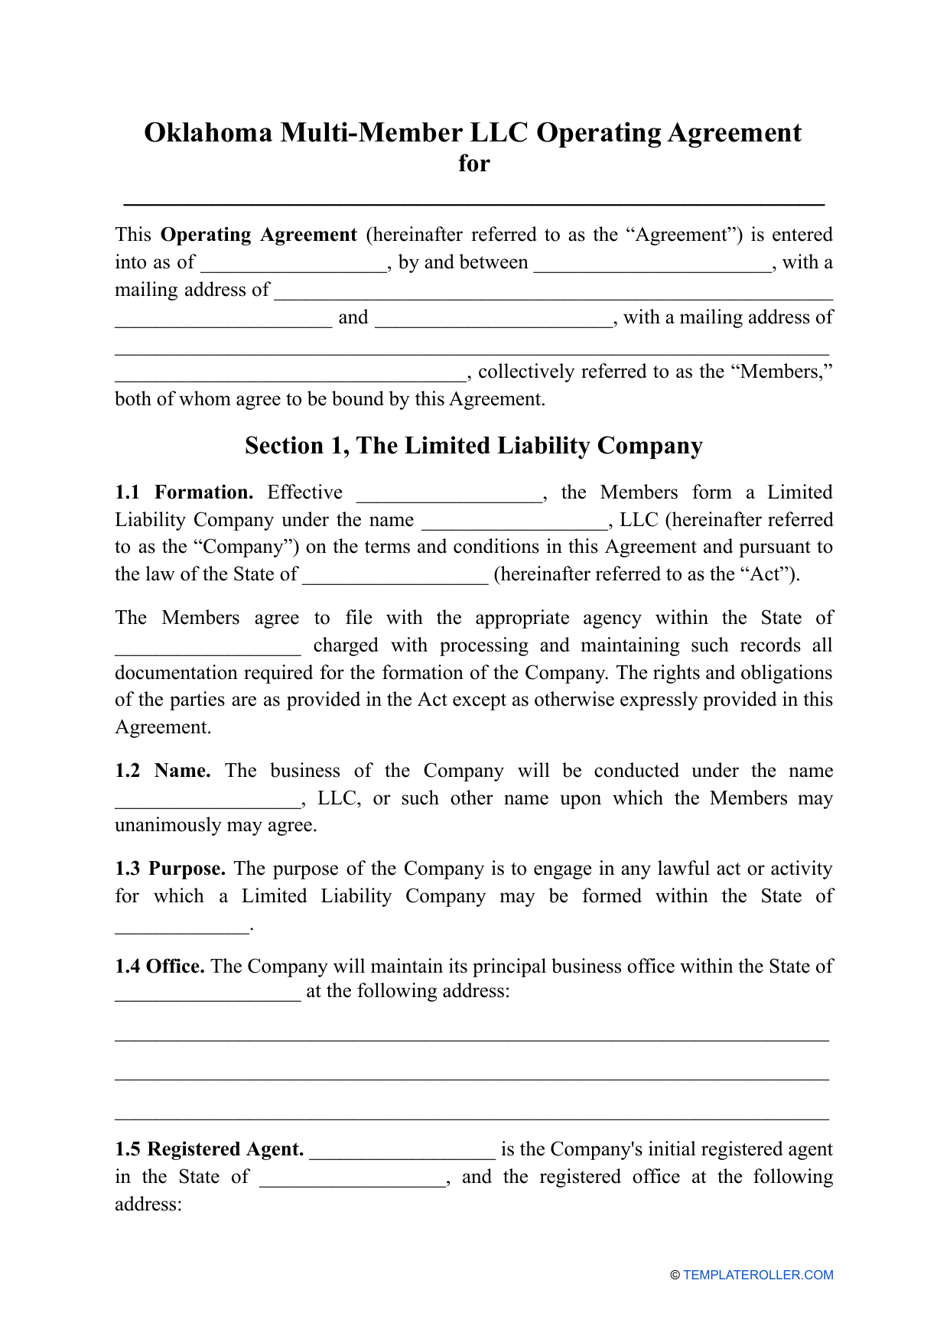 Multi-Member LLC Operating Agreement Template - Oklahoma, Page 1